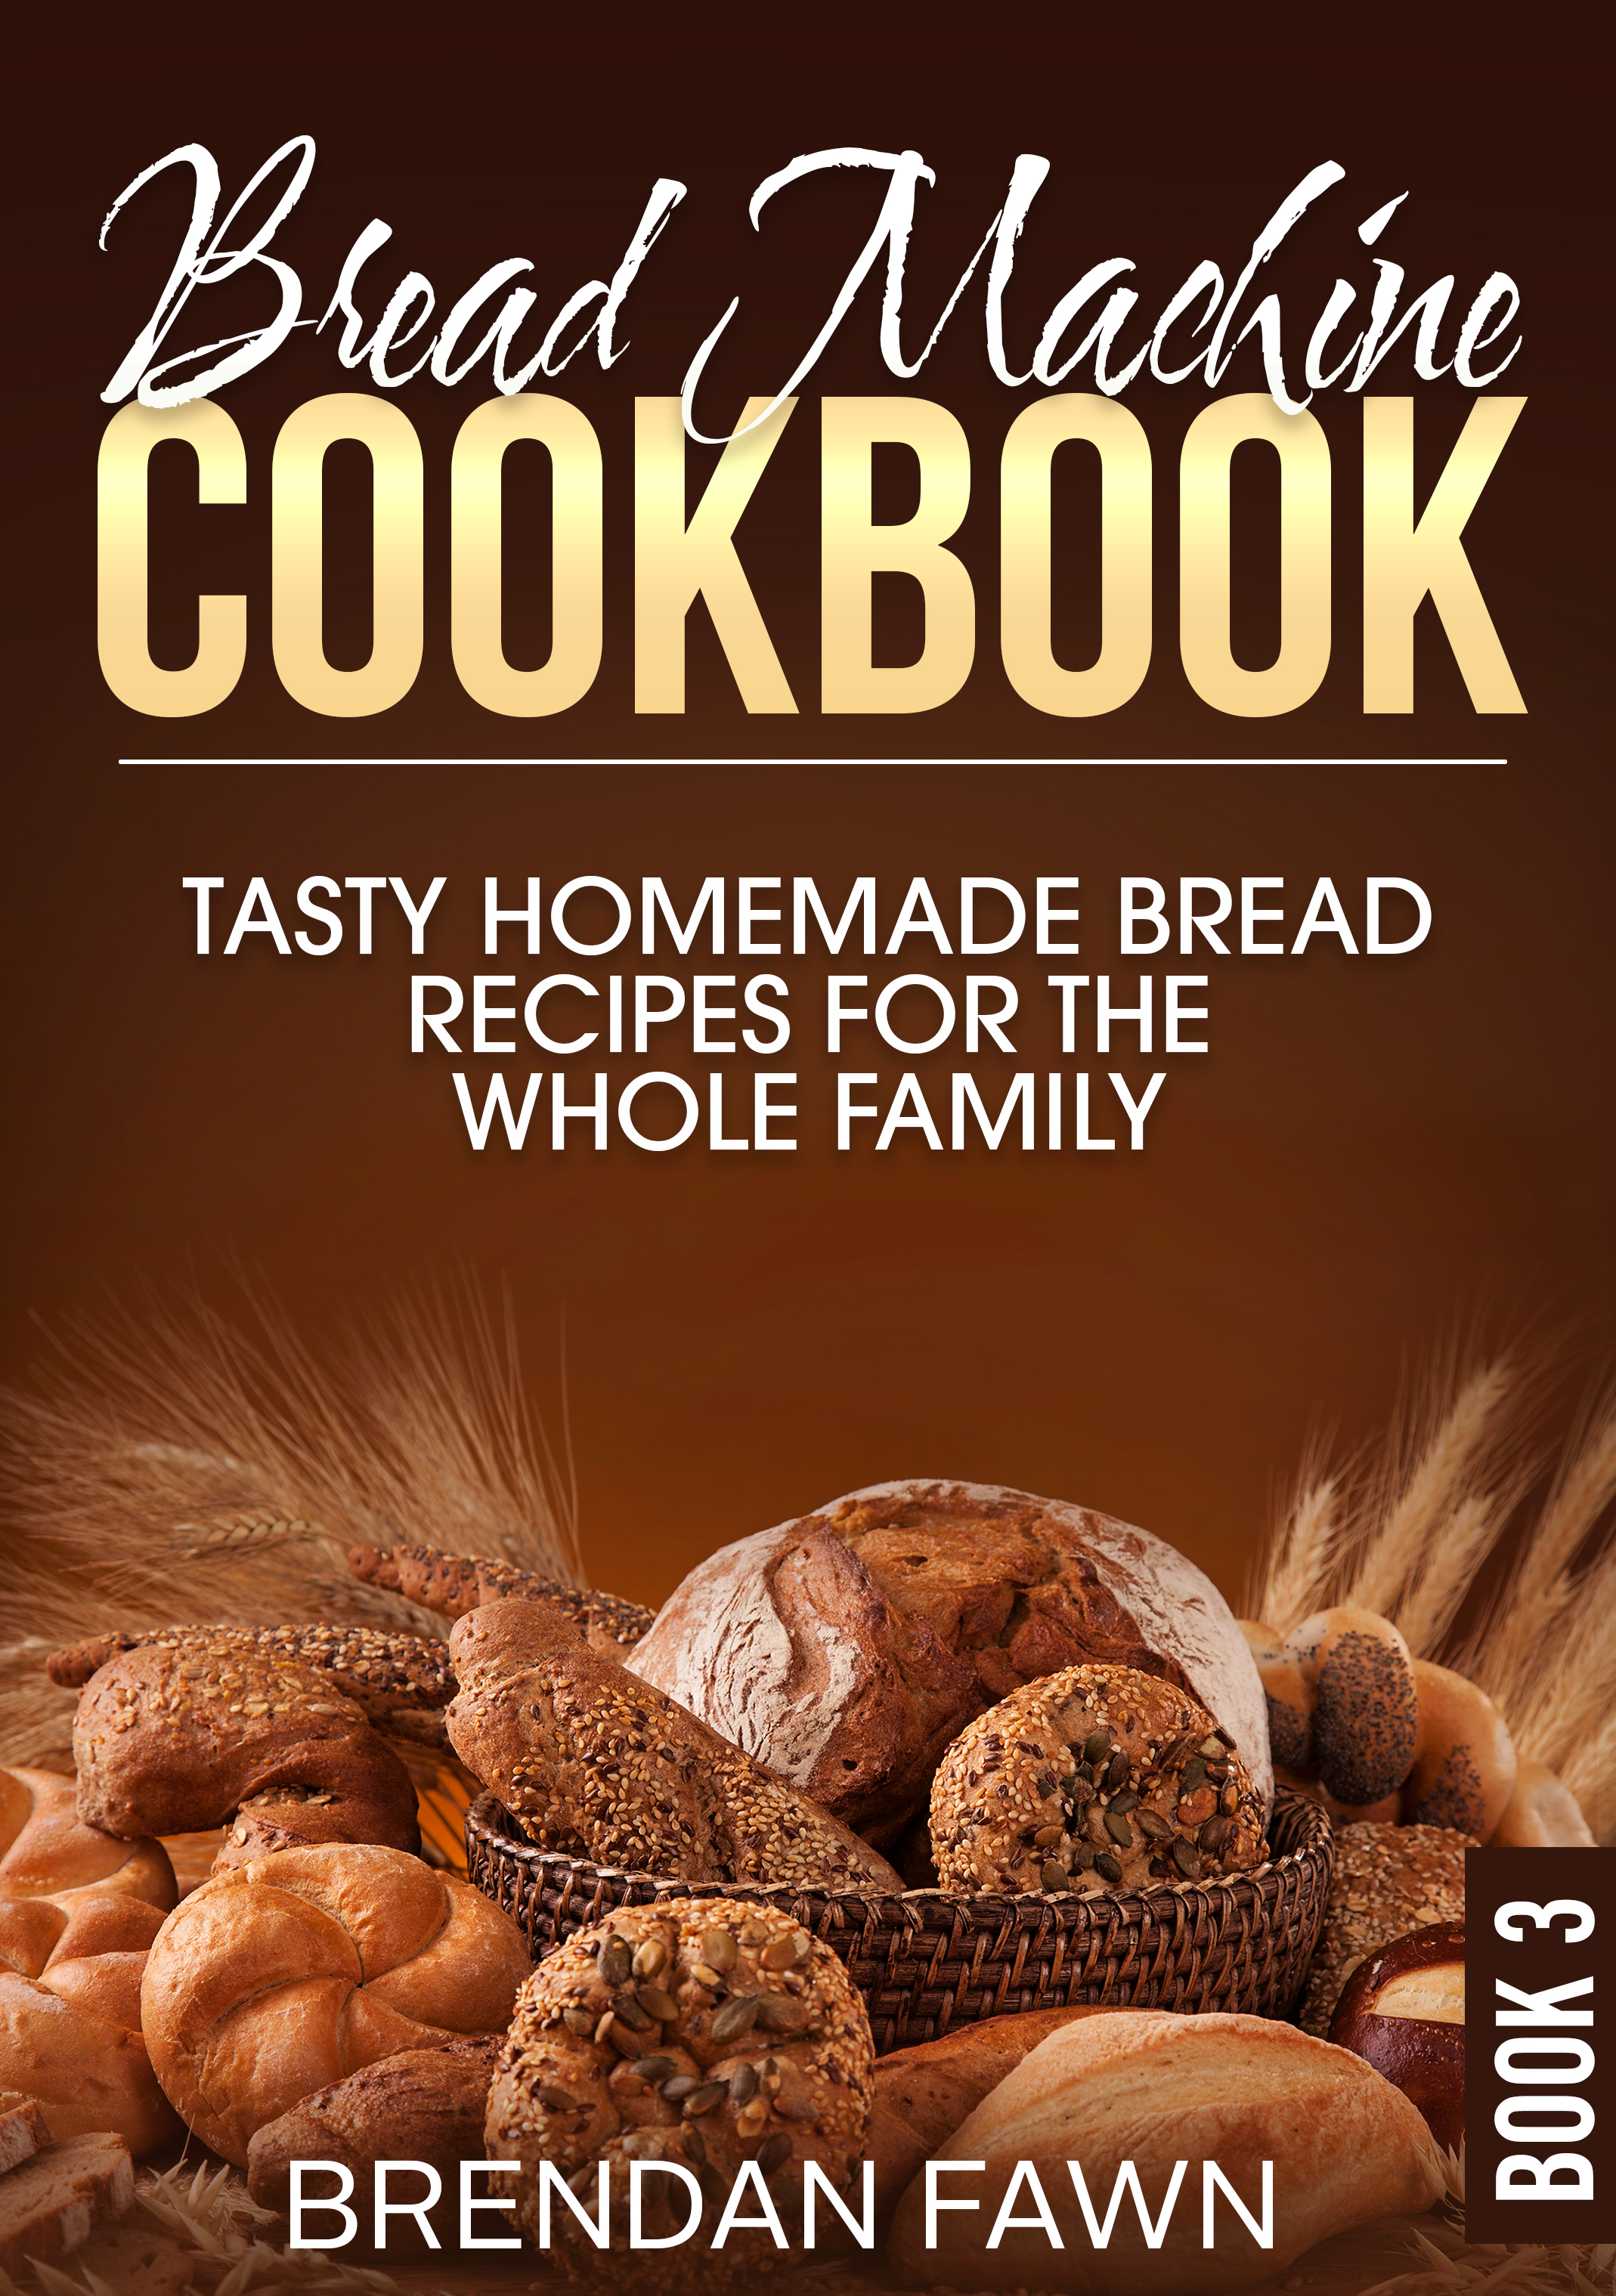 FREE: Bread Machine Cookbook by Brendan Fawn